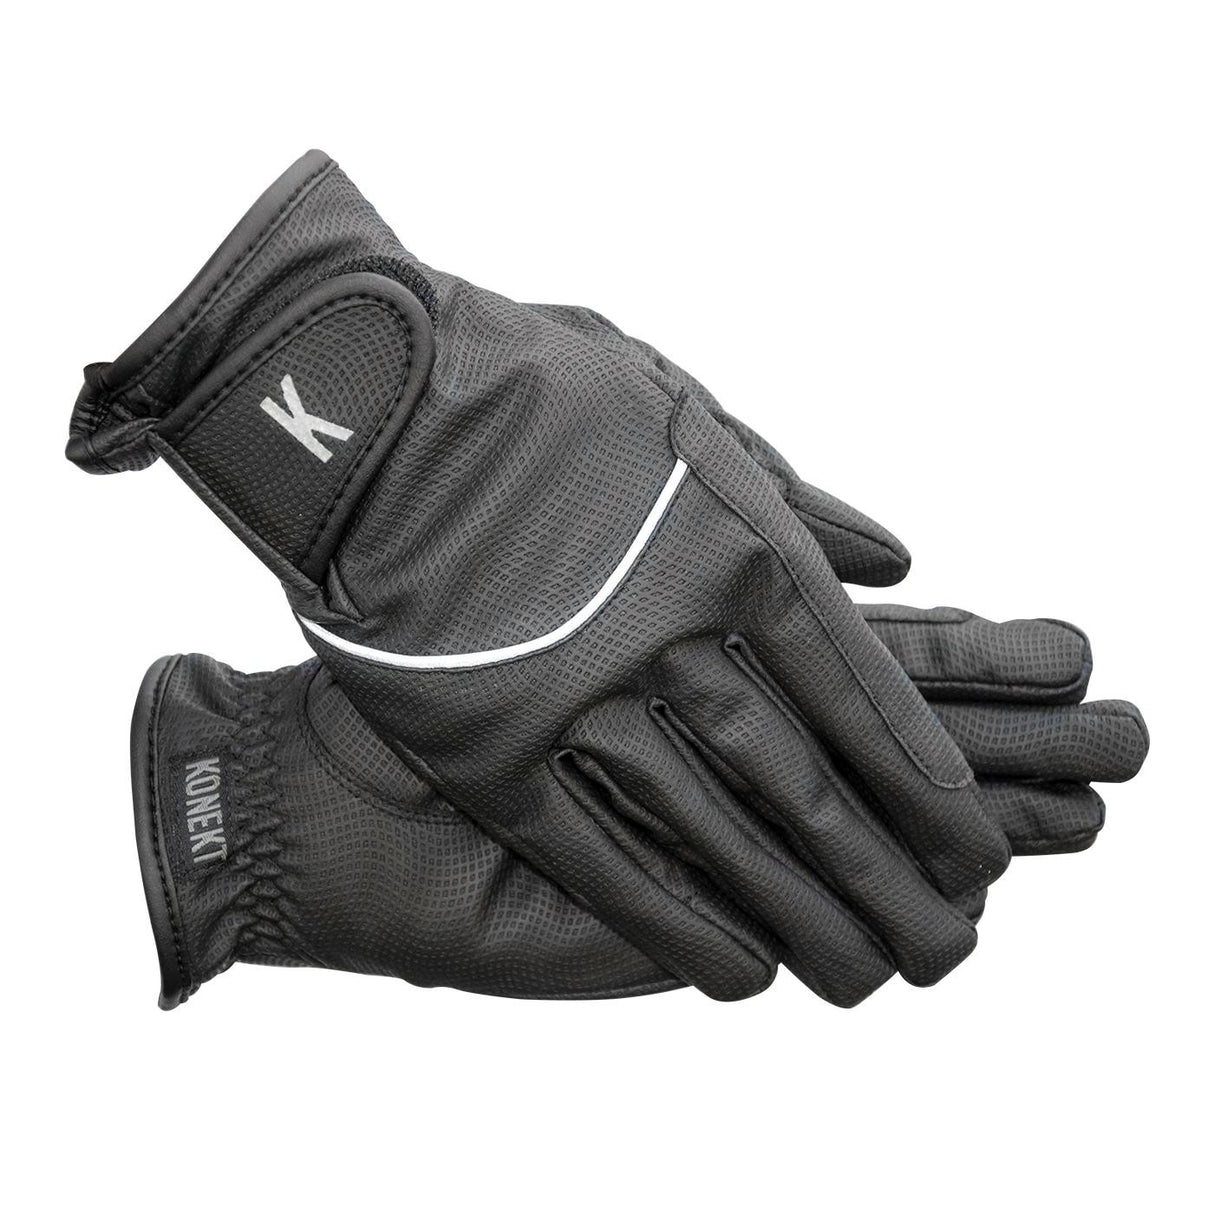 Konekt Glacial Grip Winter Gloves